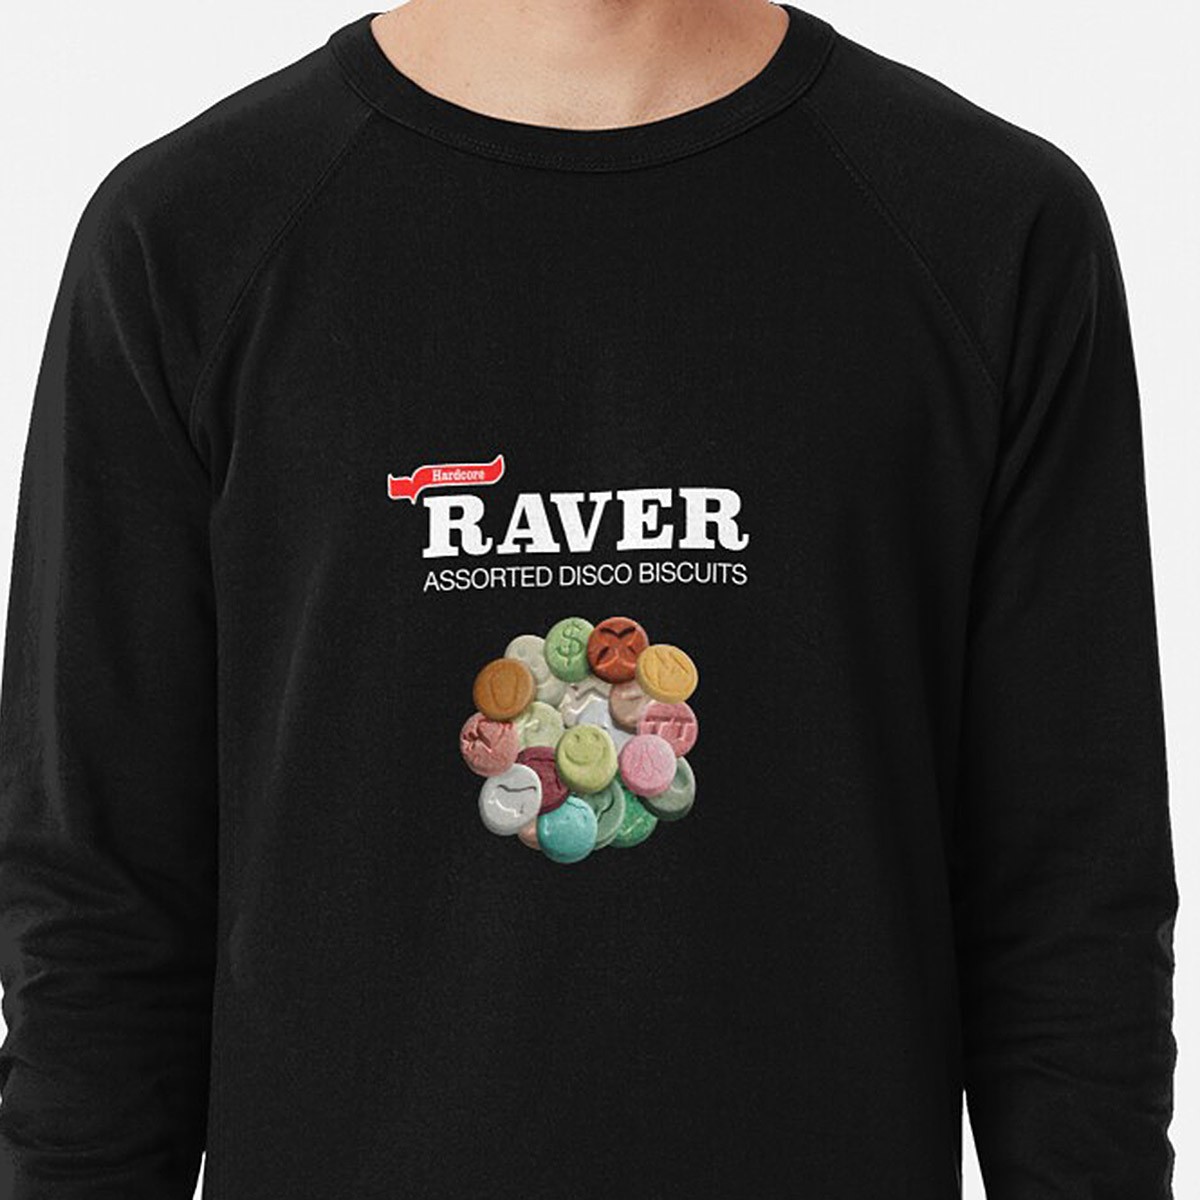 Hardcore Raver - Assorted Disco Biscuits Lightweight Sweatshirt by NTK Apparel